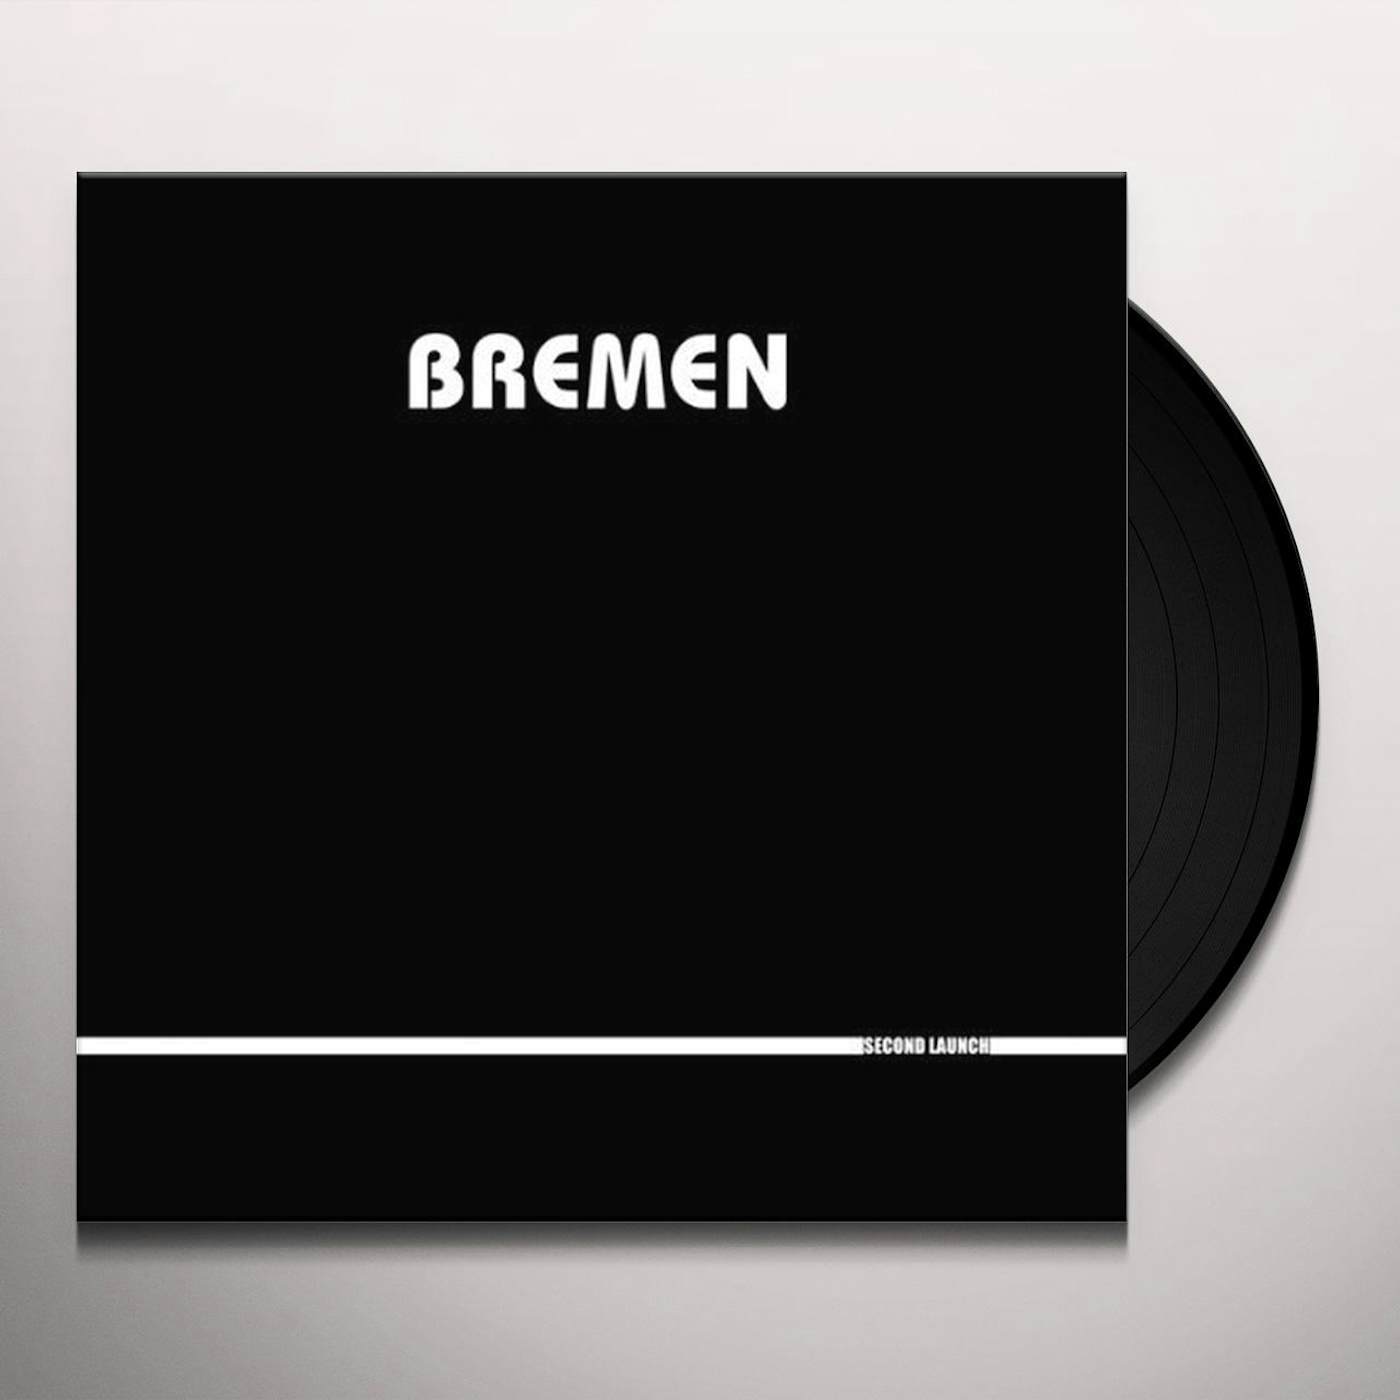 Bremen Second Launch Vinyl Record